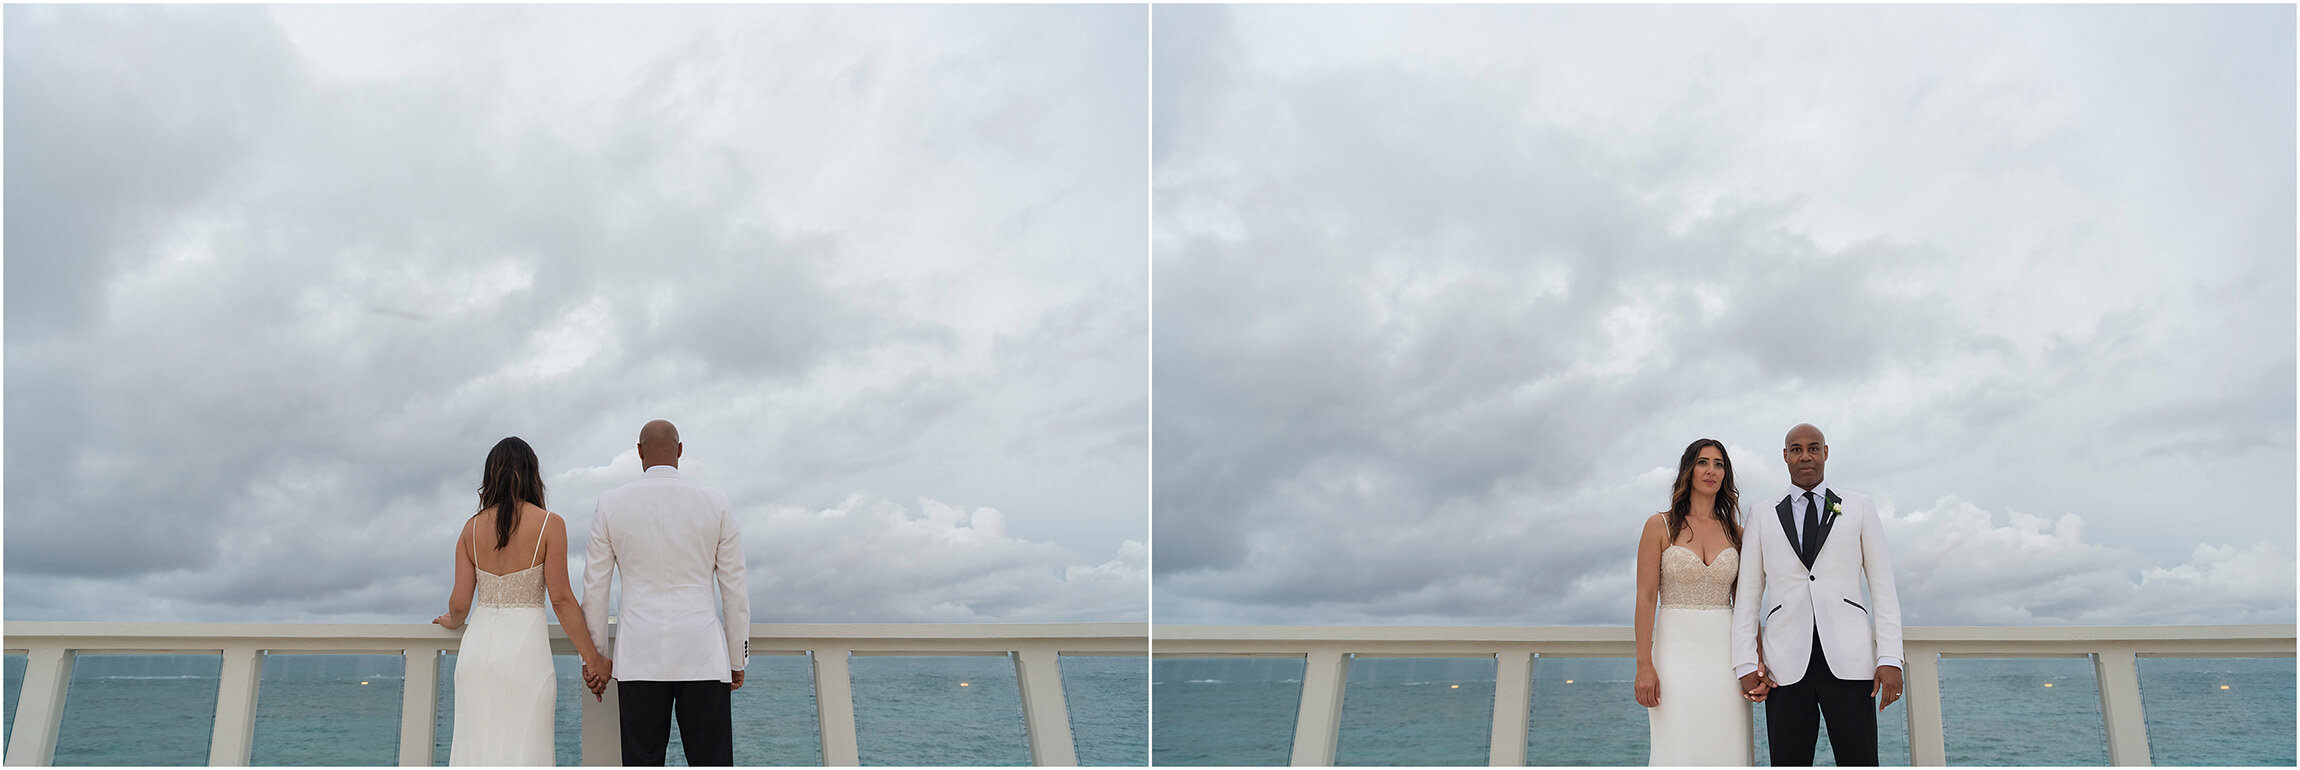 Bermuda Elopement Photographer_©Fiander Foto_The Loren_055.jpg